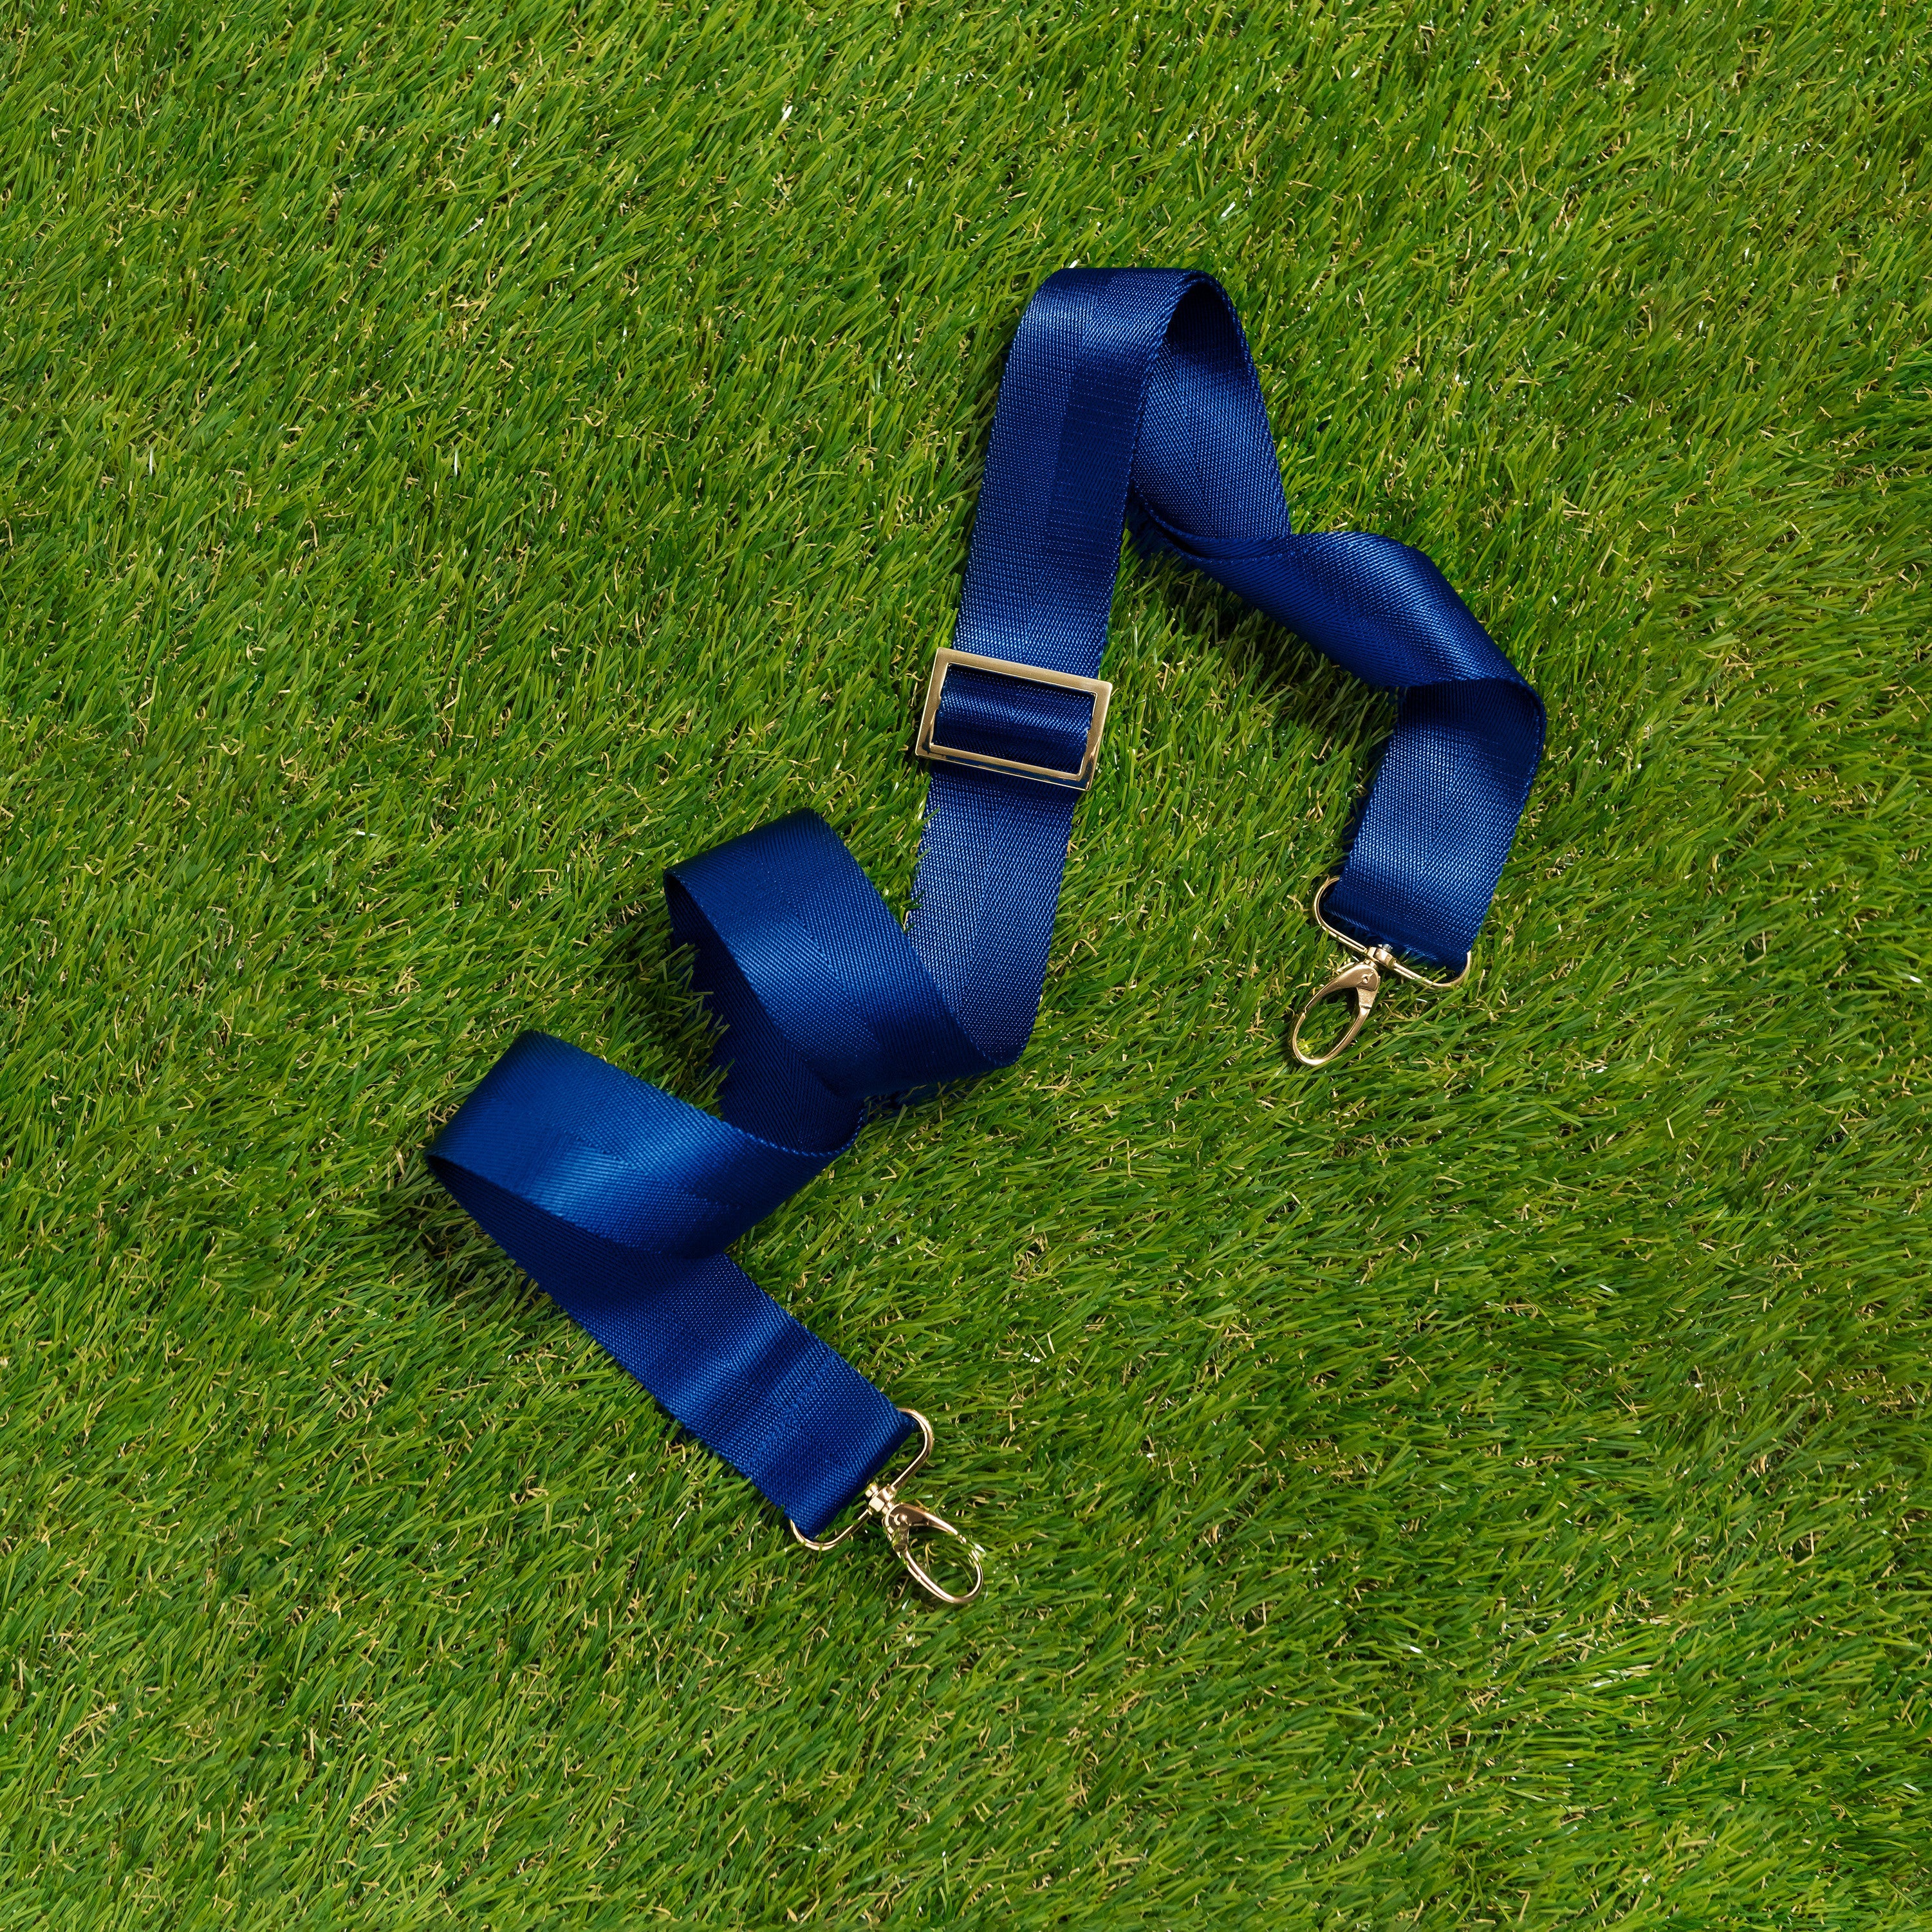 Skyler Blue’s adjustable, nylon webbing navy blue fanny pack strap with herringbone weave and gold hardware.  